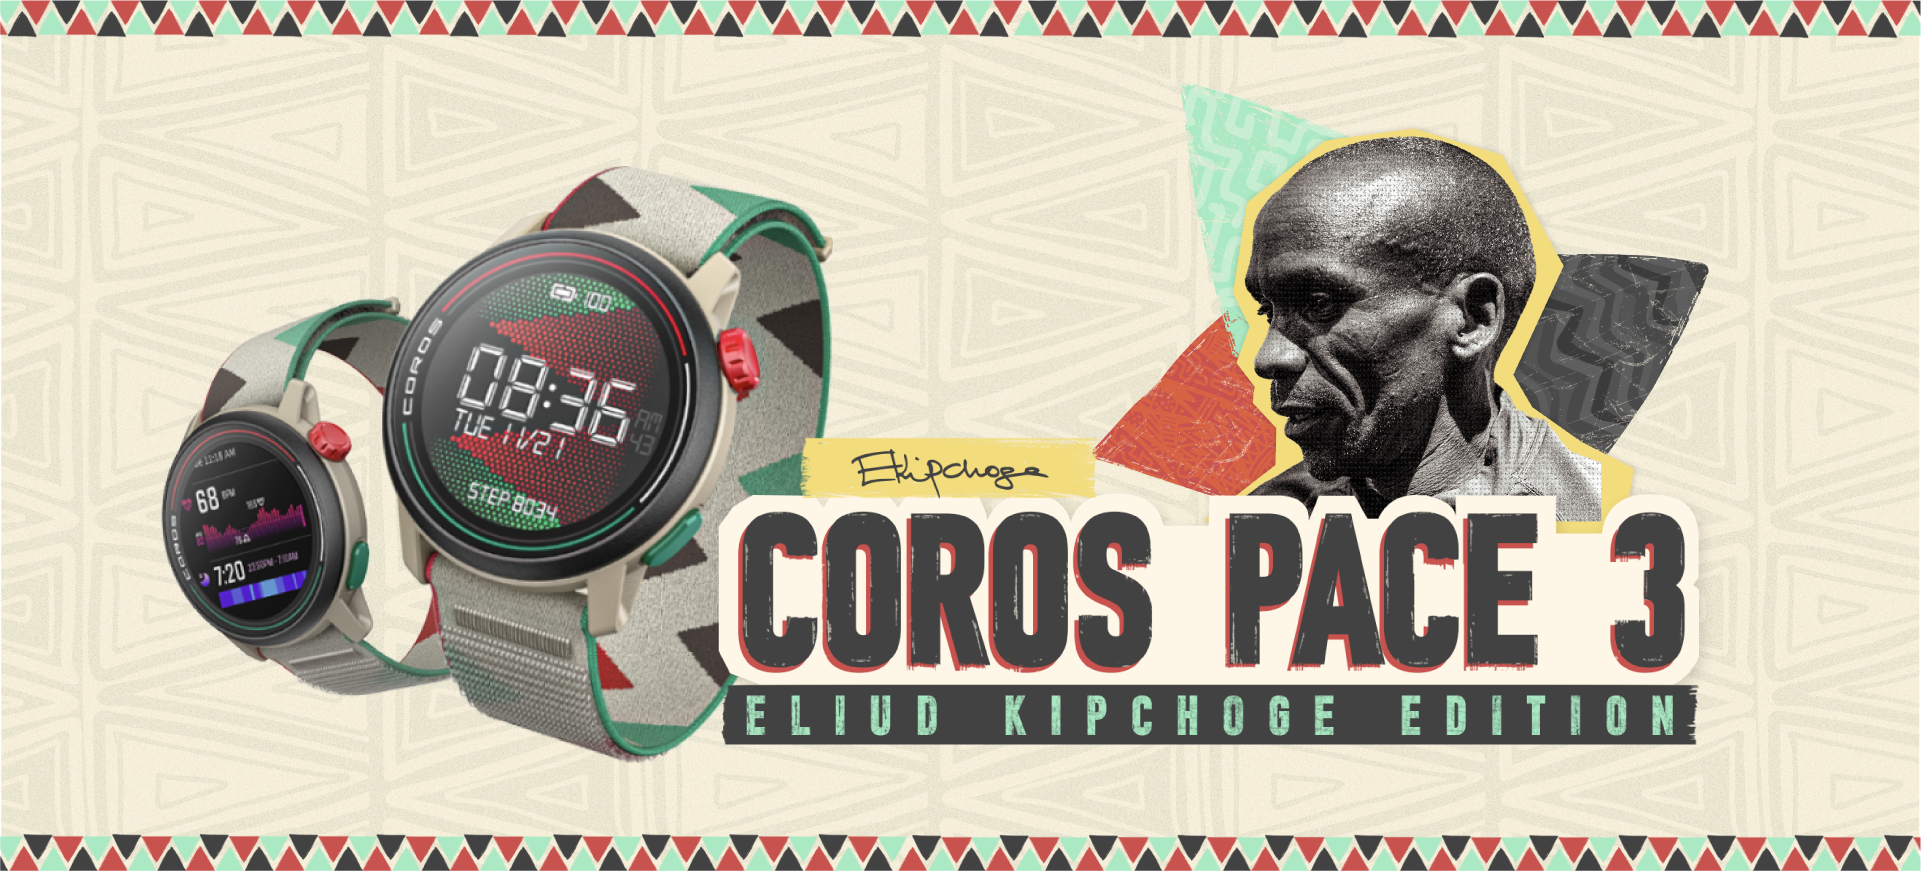 COROS Pace 3 Eliud Kipchoge